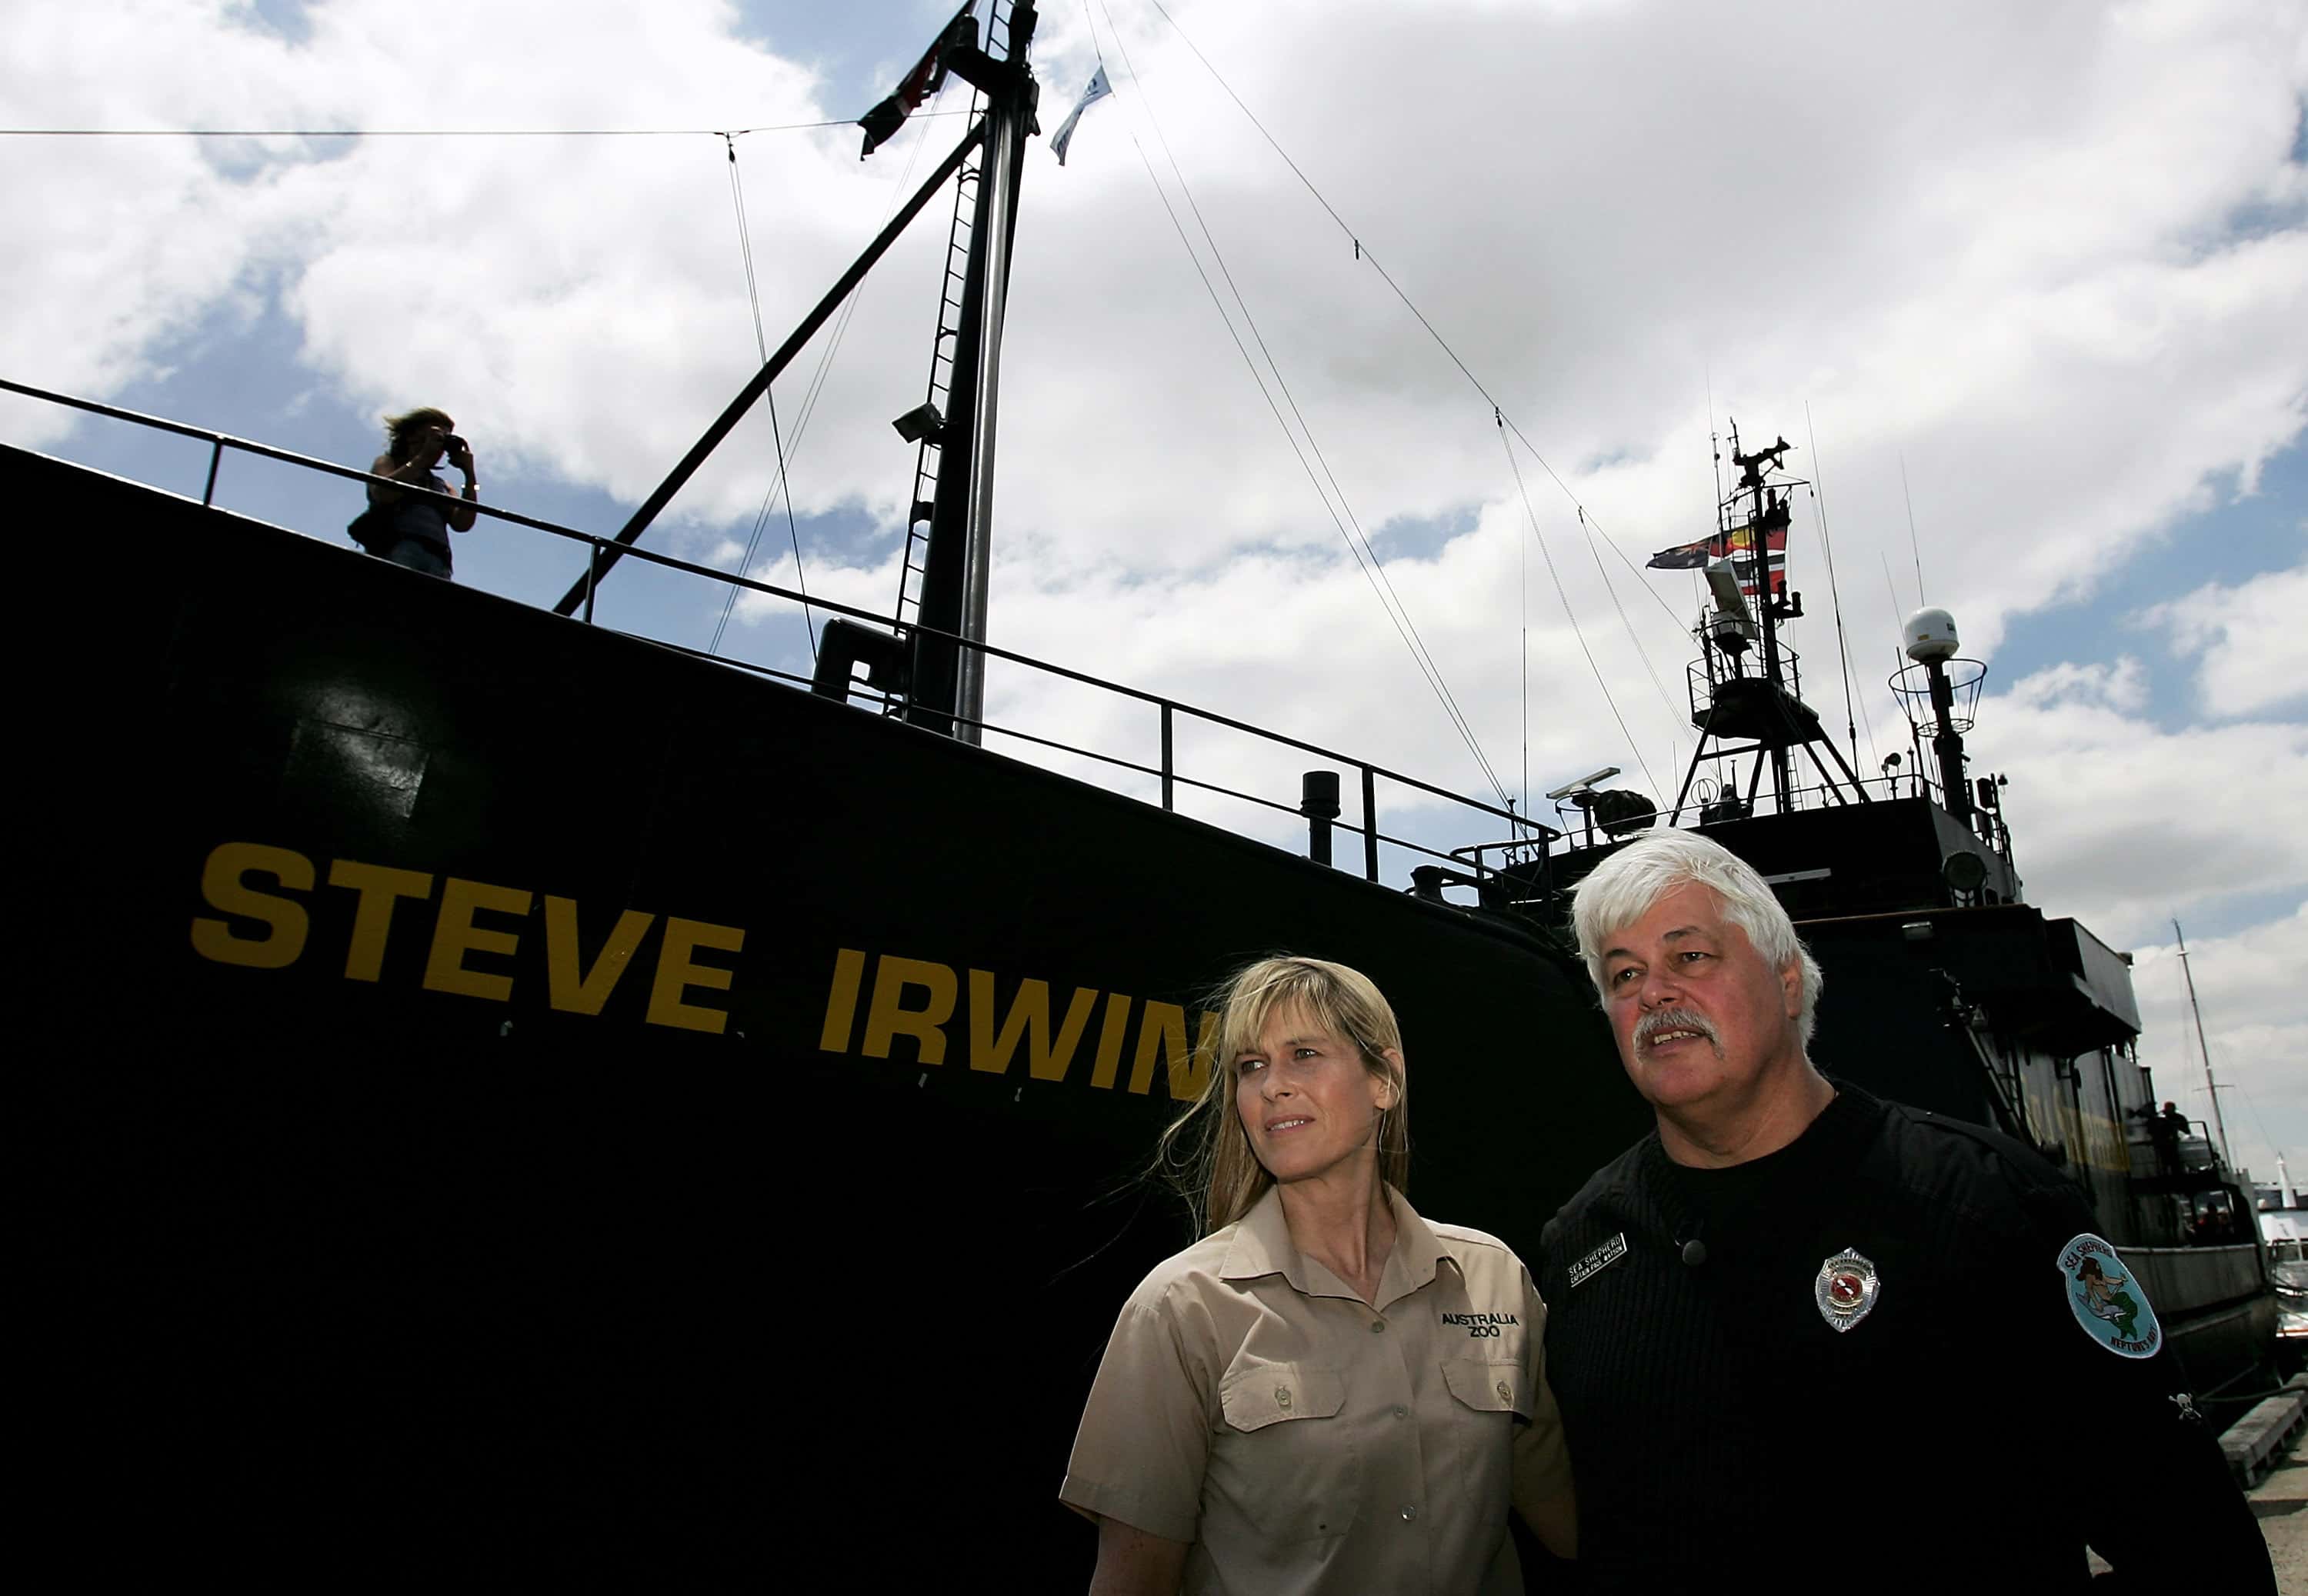 Steve Irwin Facts